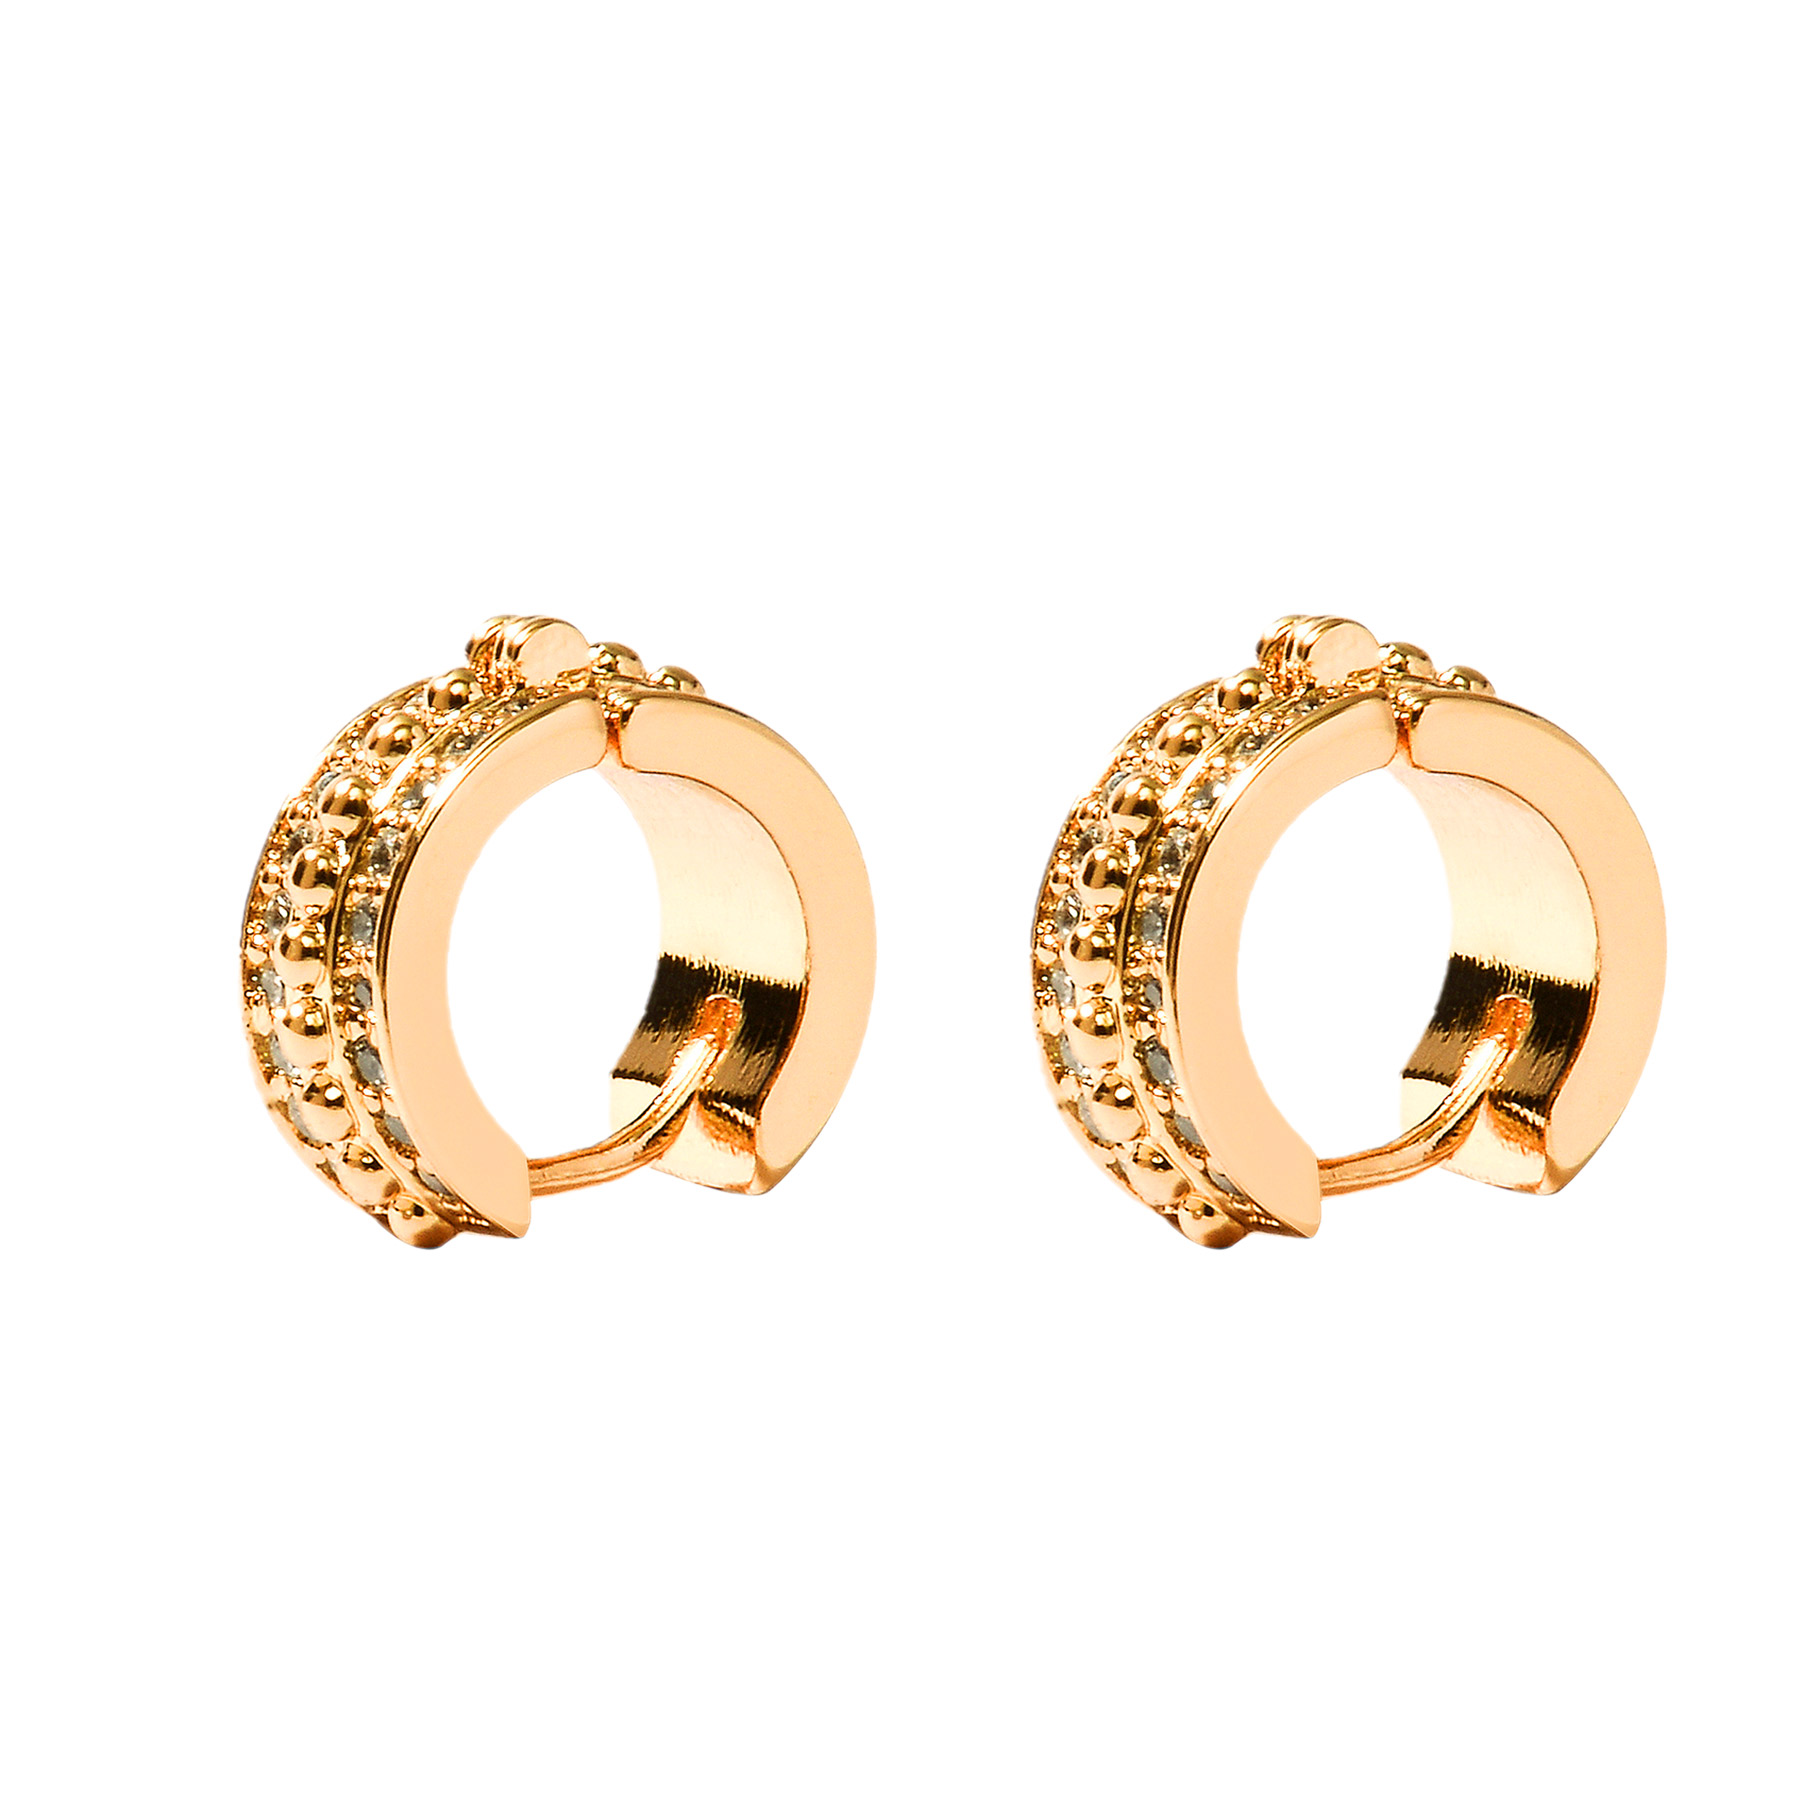 QM – 18K Gold Plated Brass Cubic Zirconia Cuff Earrings Huggie Stud